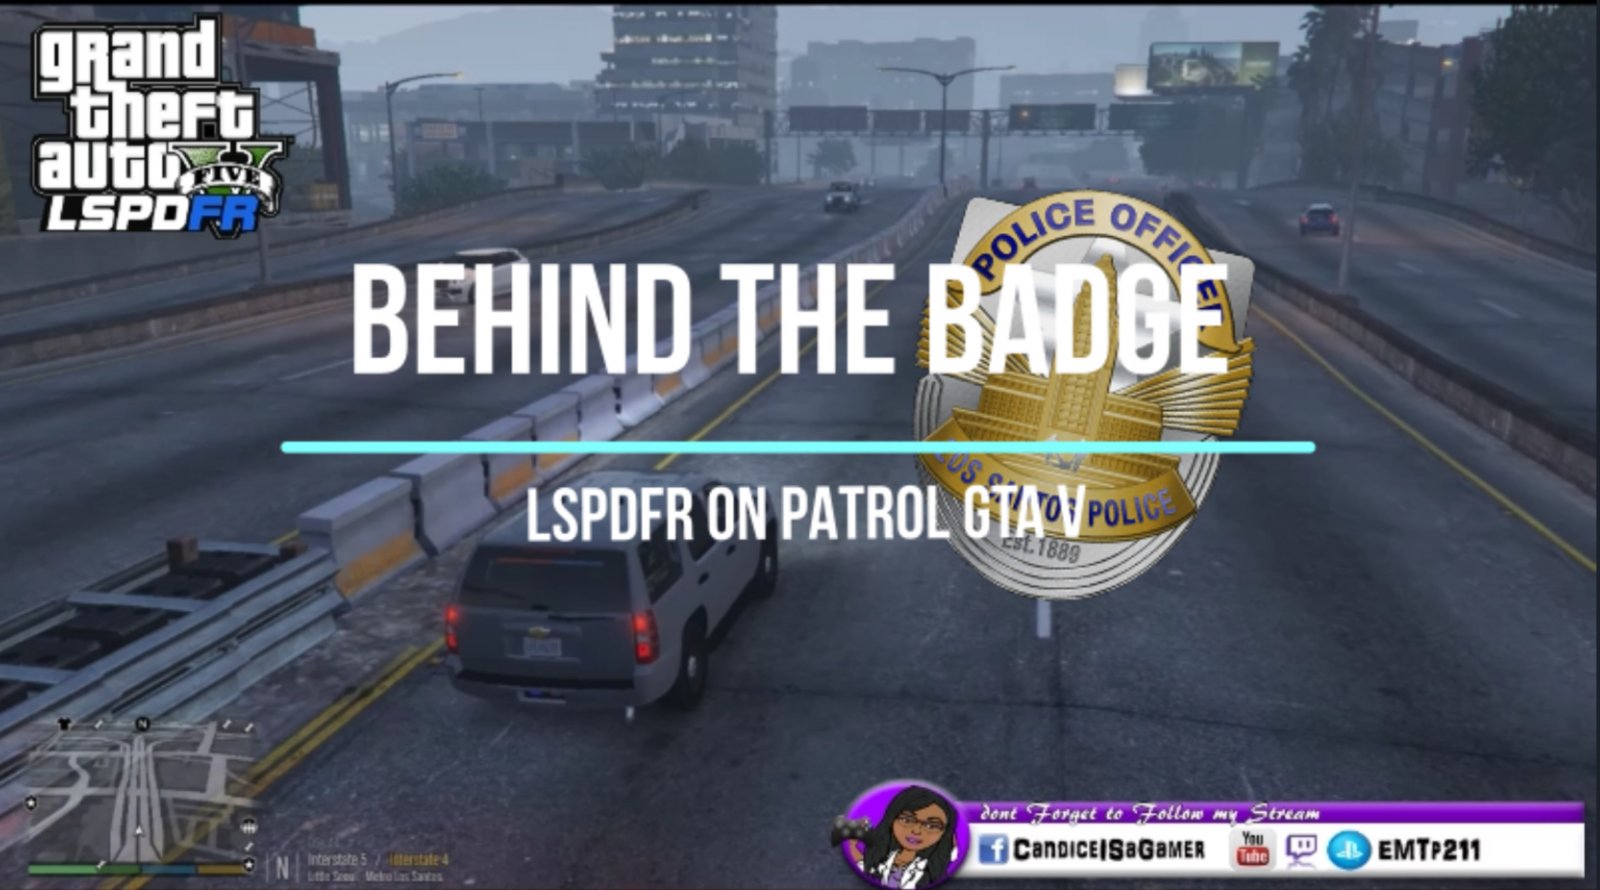 Behind the Badge LSPDFR on Patrol